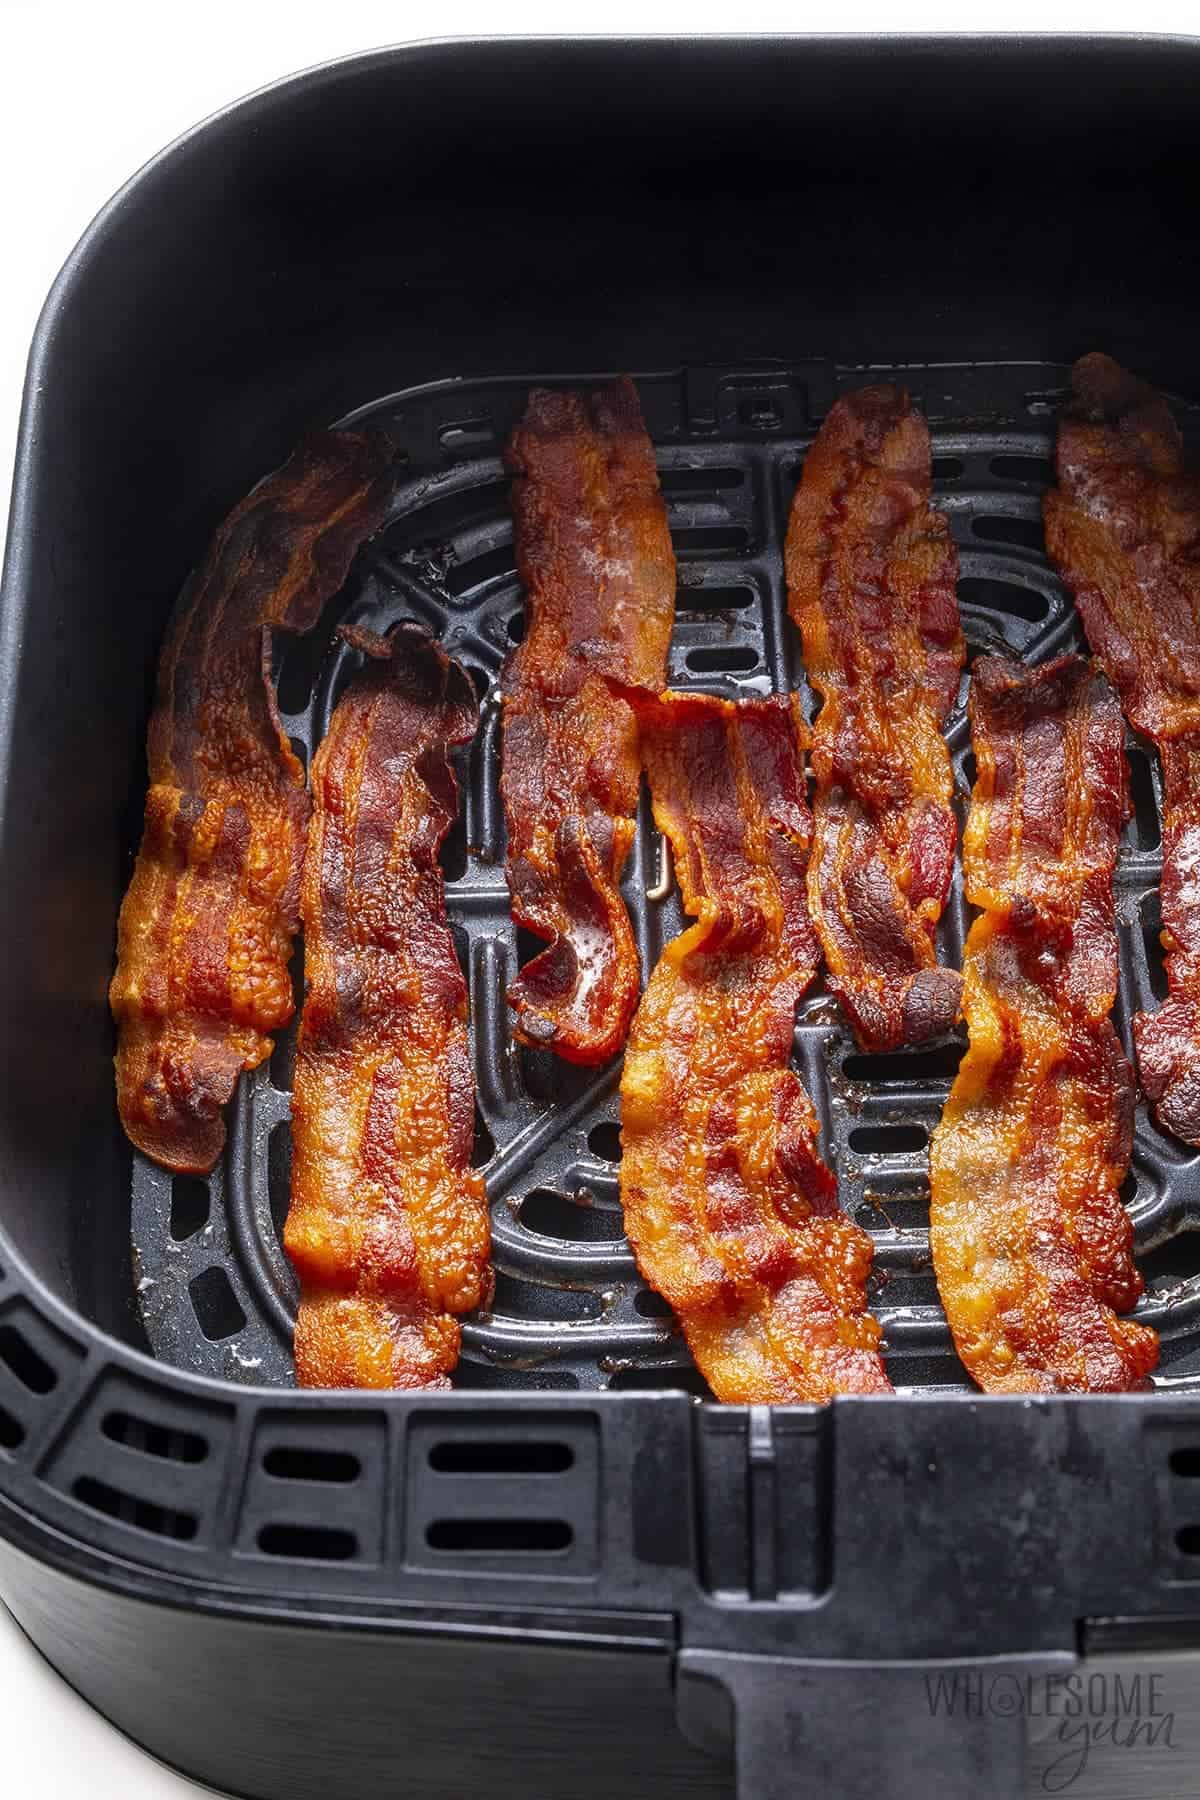 Crispy bacon in the air fryer.